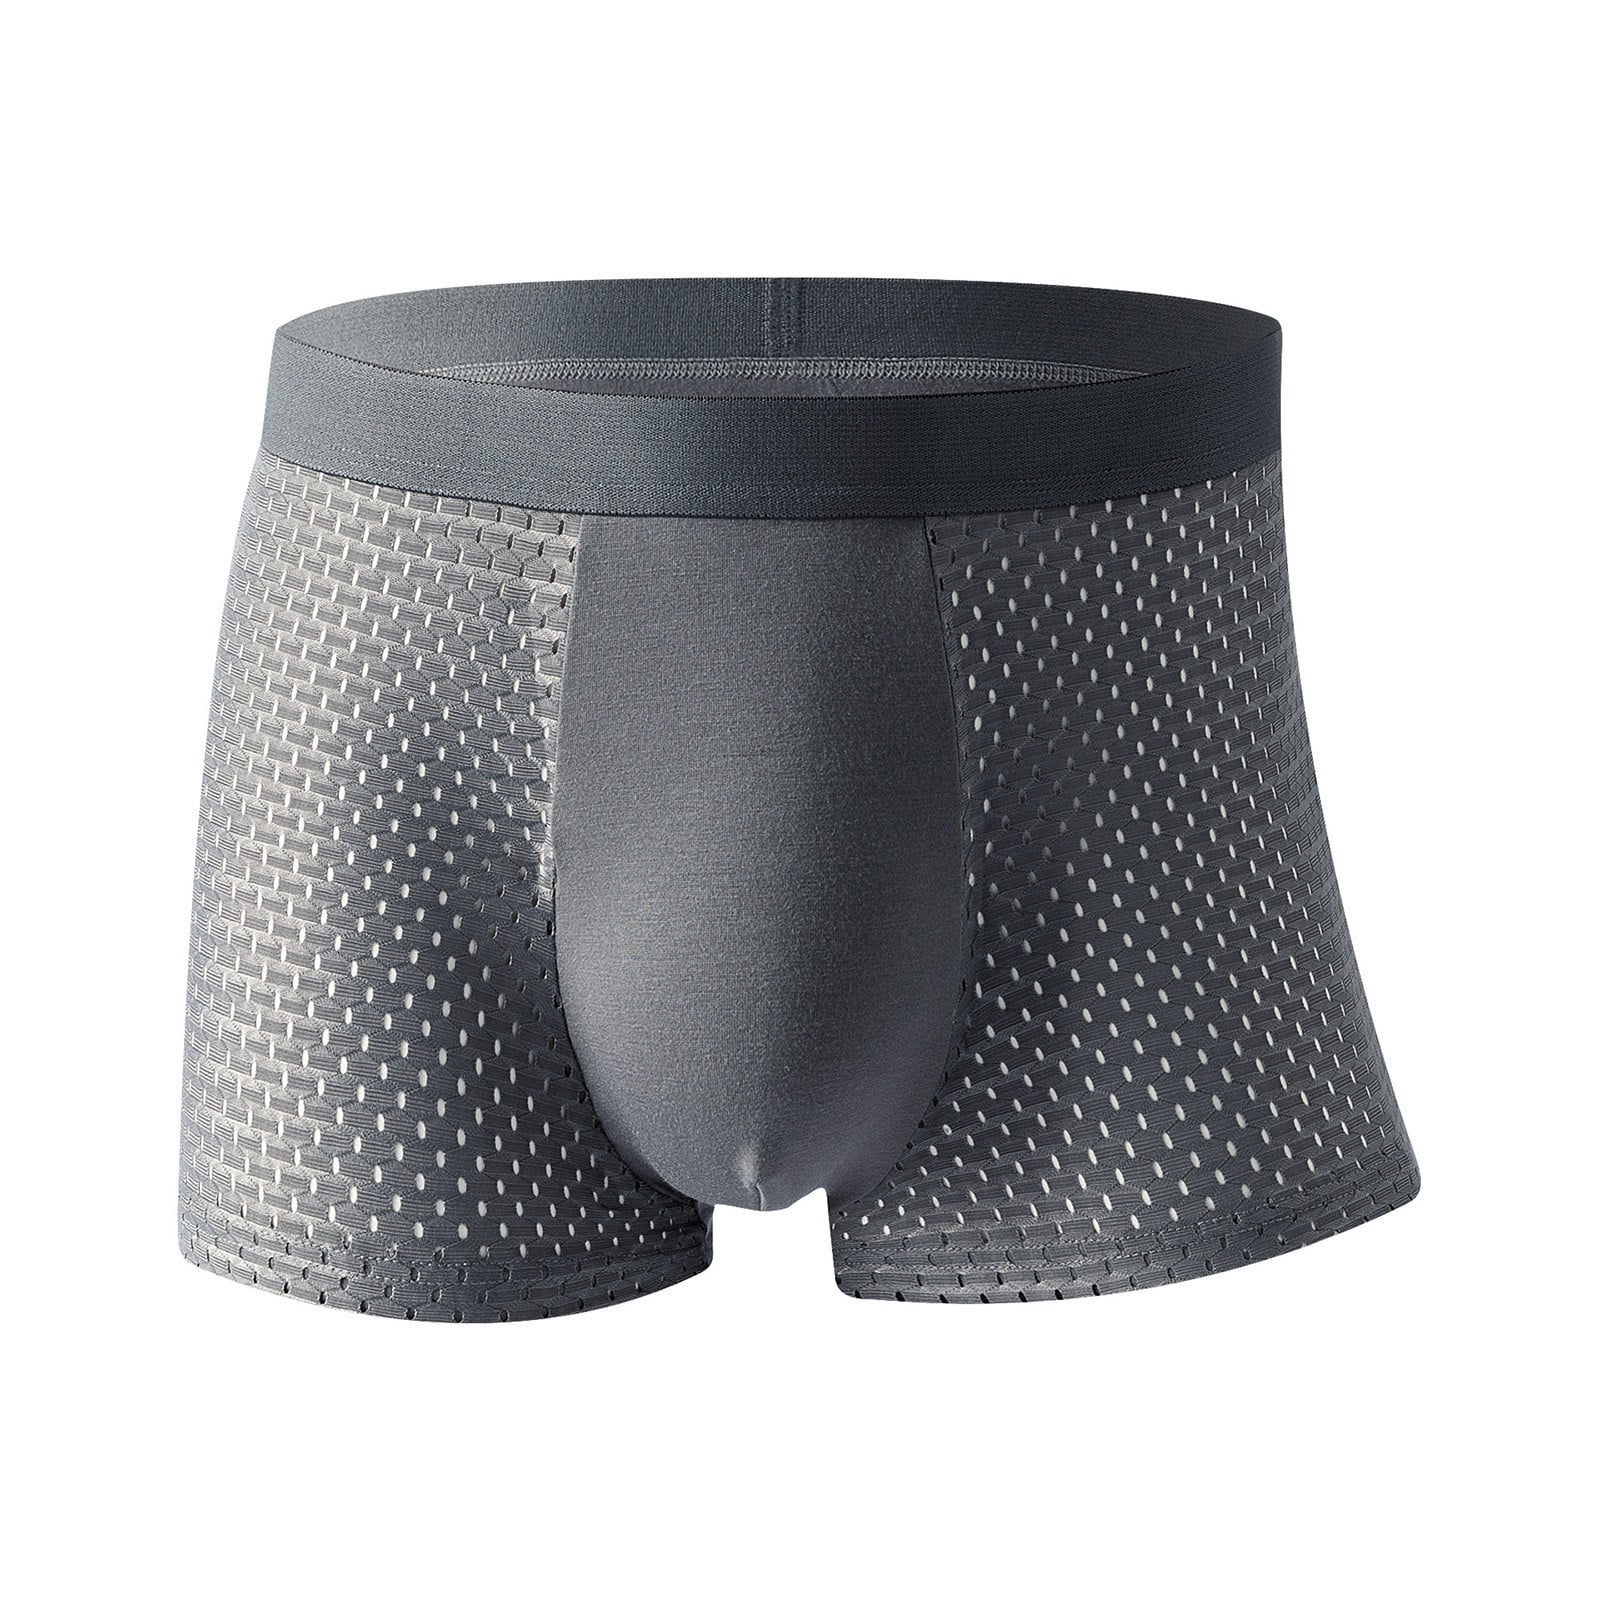 Durtebeua Long Boxer Briefs For Men Men's Underwear Cool Cotton Hammock  Pouch Trunk with Shorter Comfortable Breathable Underwear